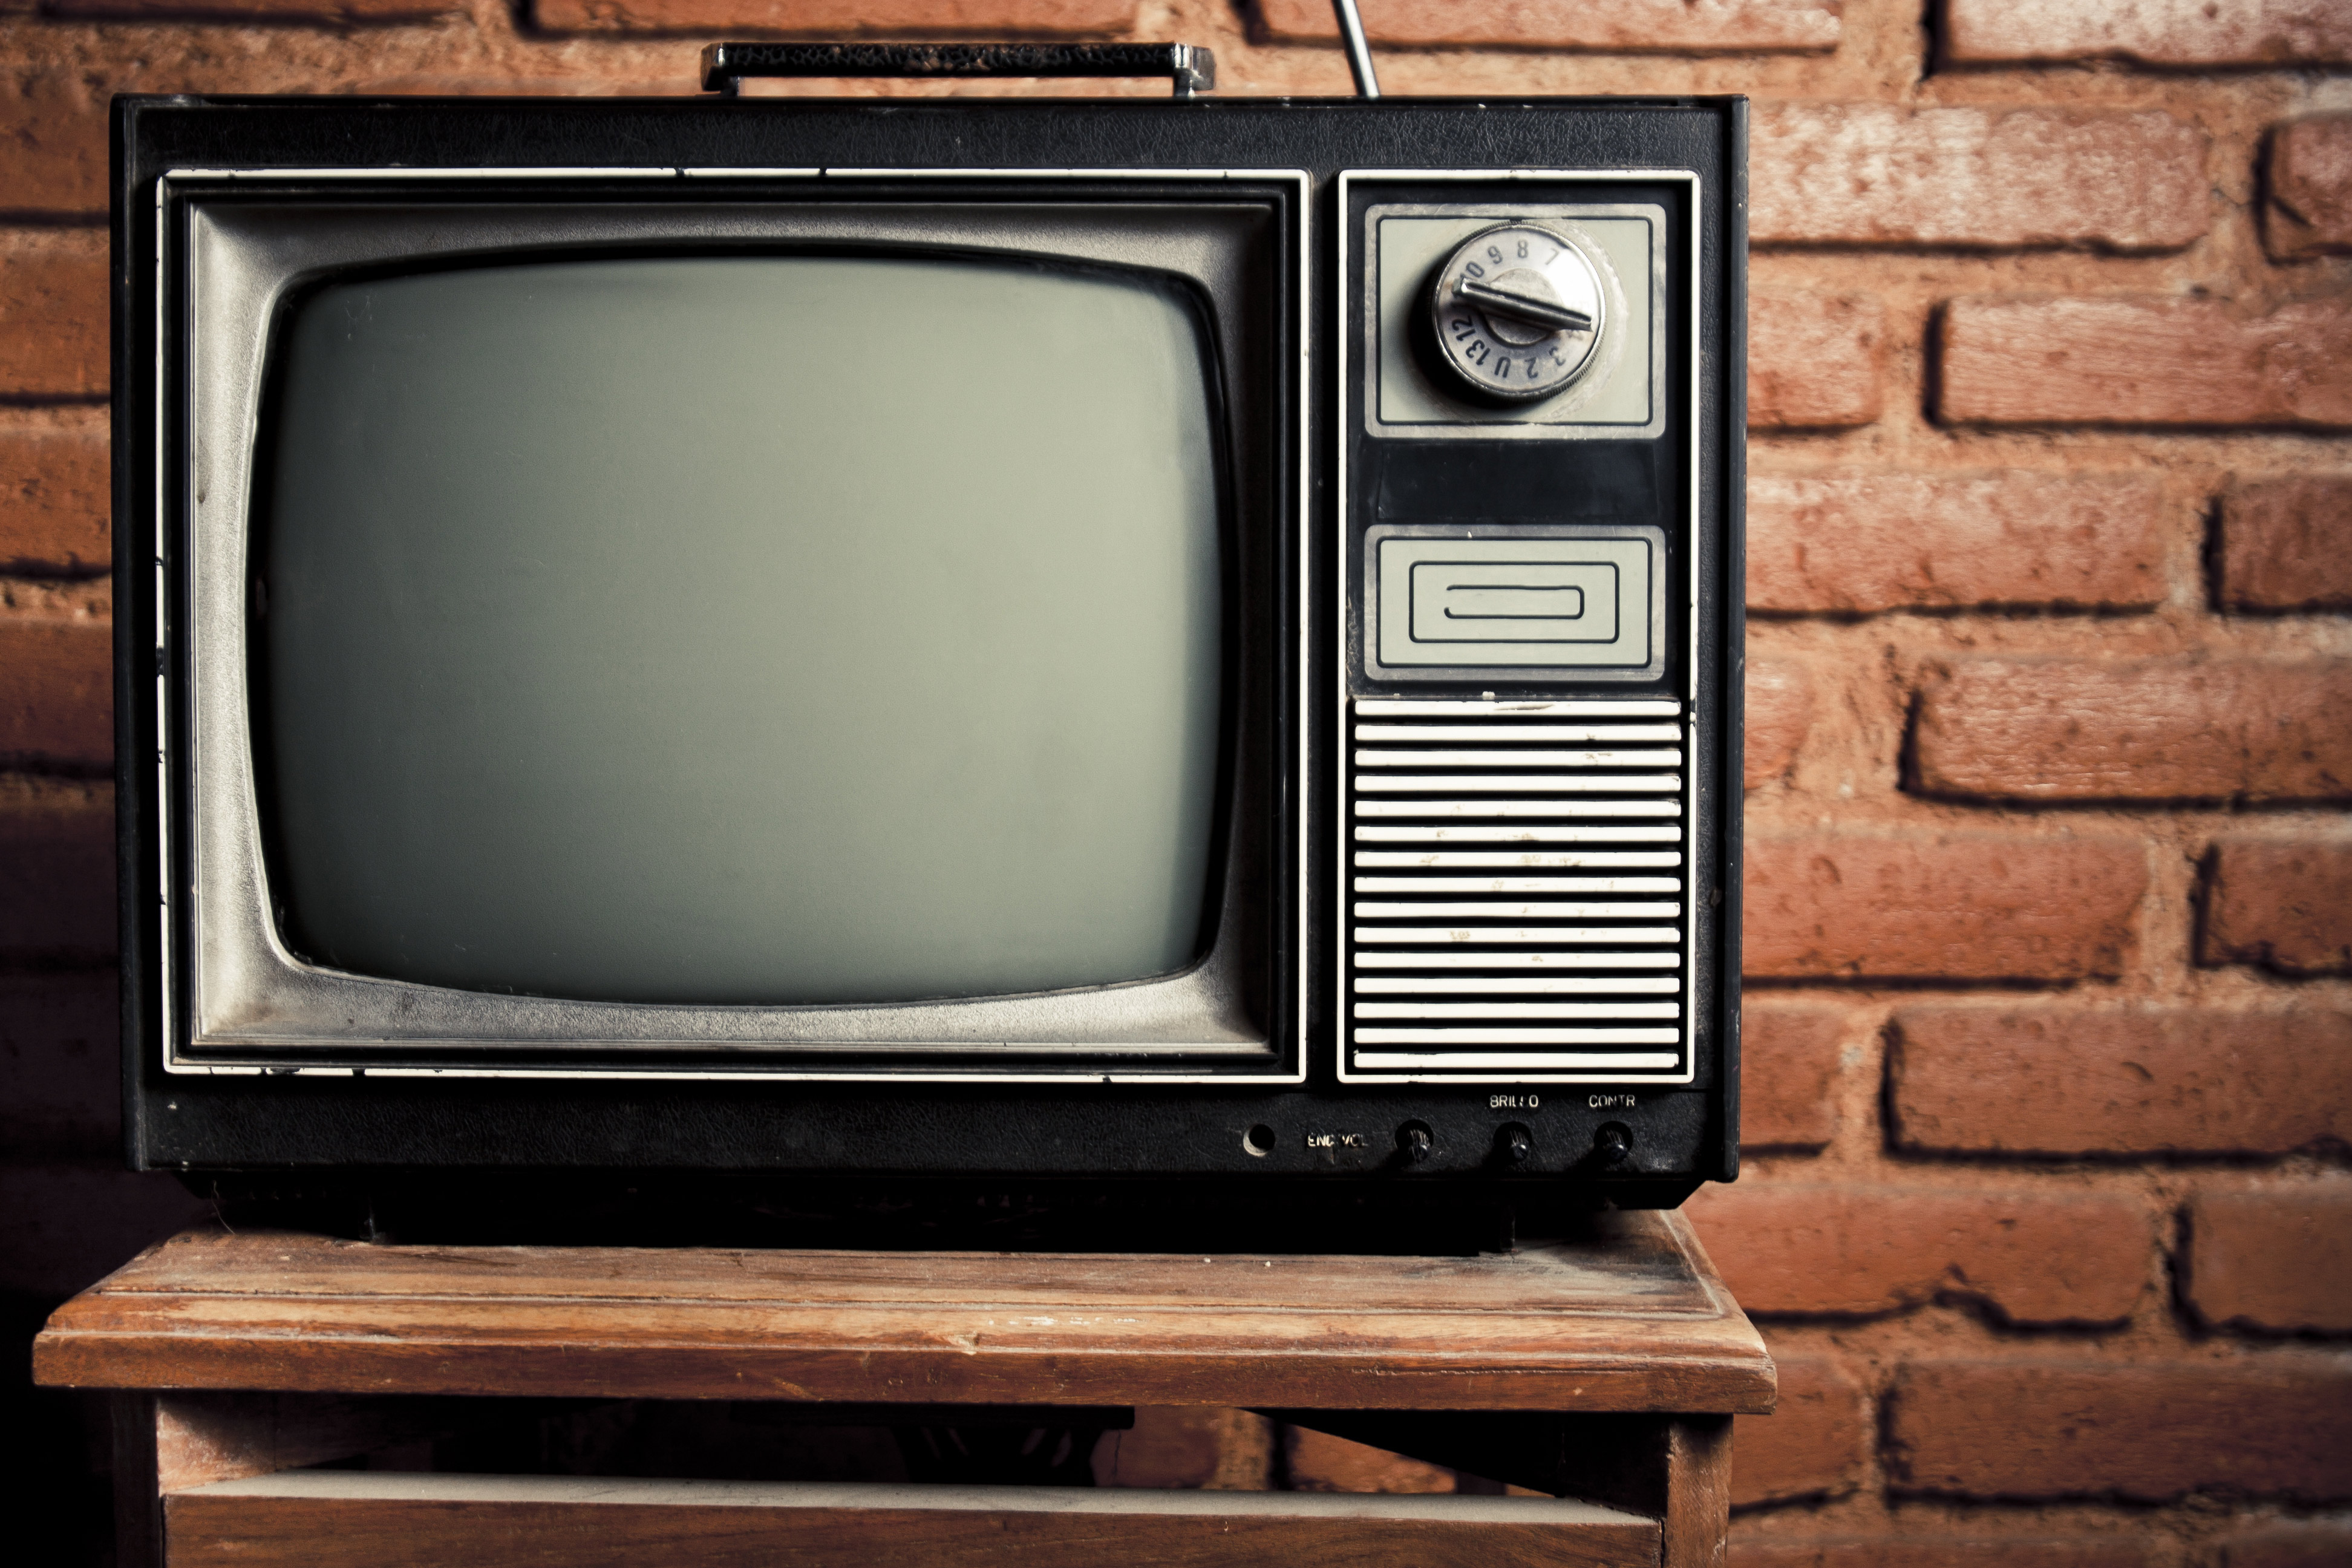 Телевизионный экран. Старый телевизор. Старинный телевизор. Ретро телевизор. Винтажный телевизор.